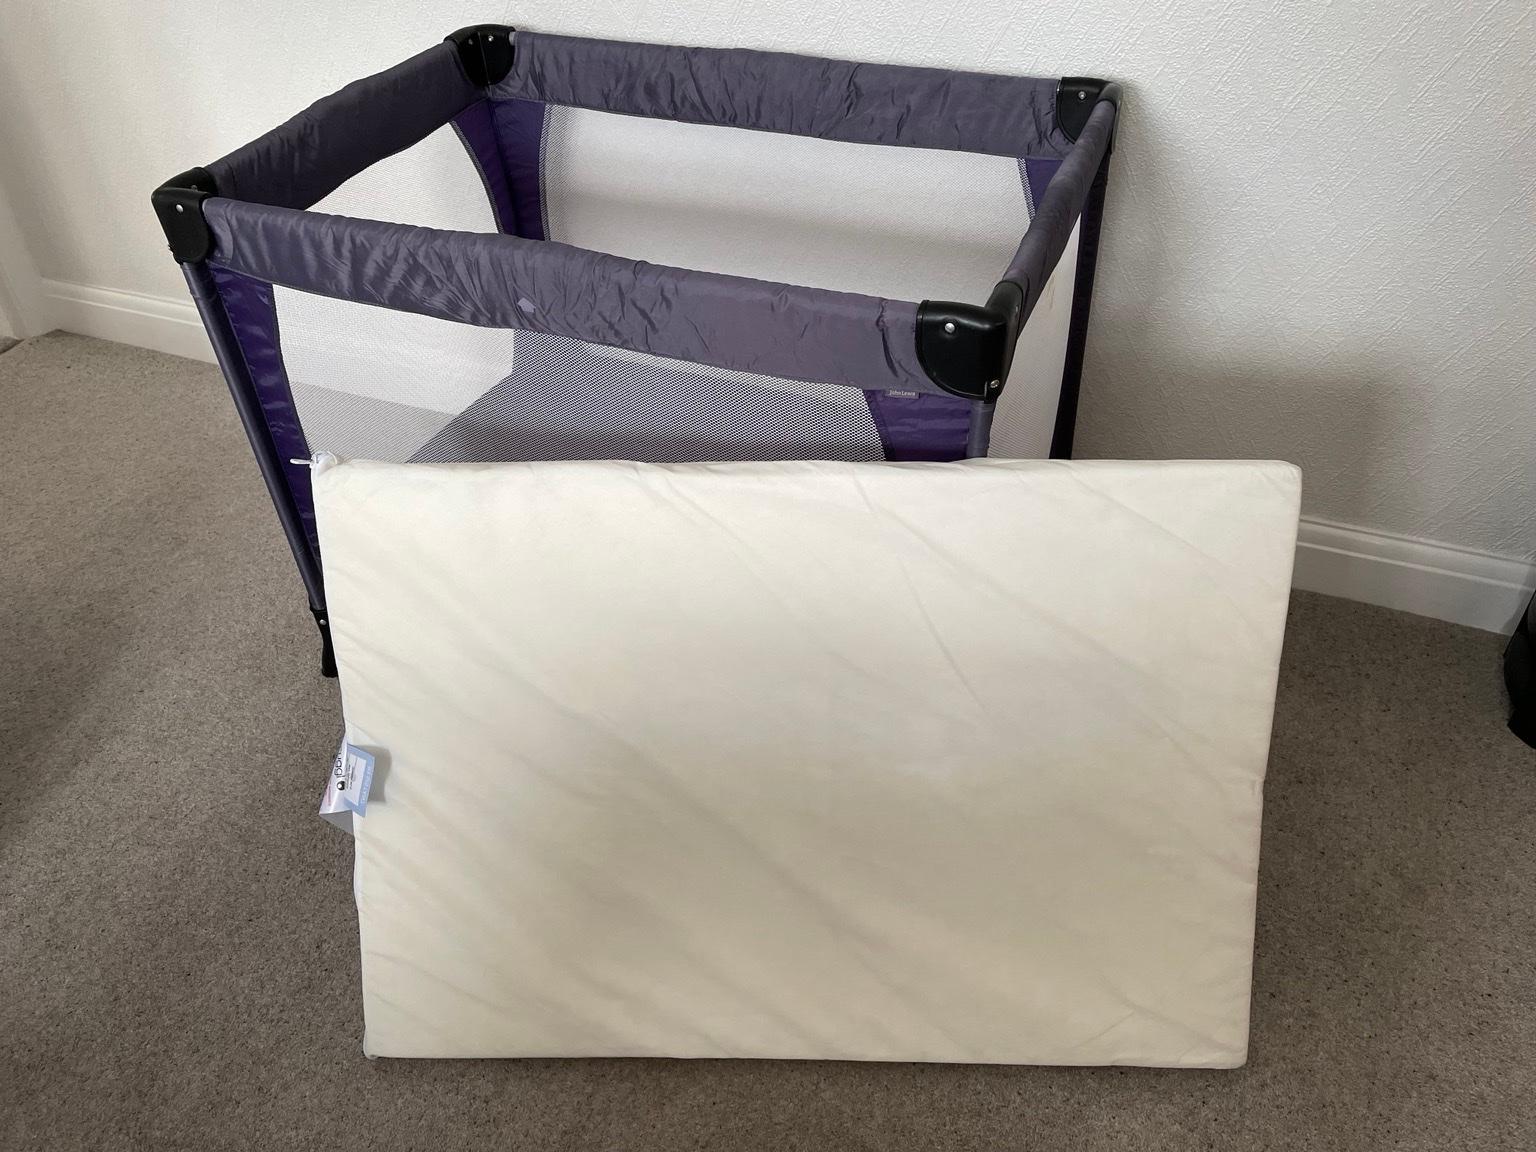 mamia lightweight travel cot mattress size